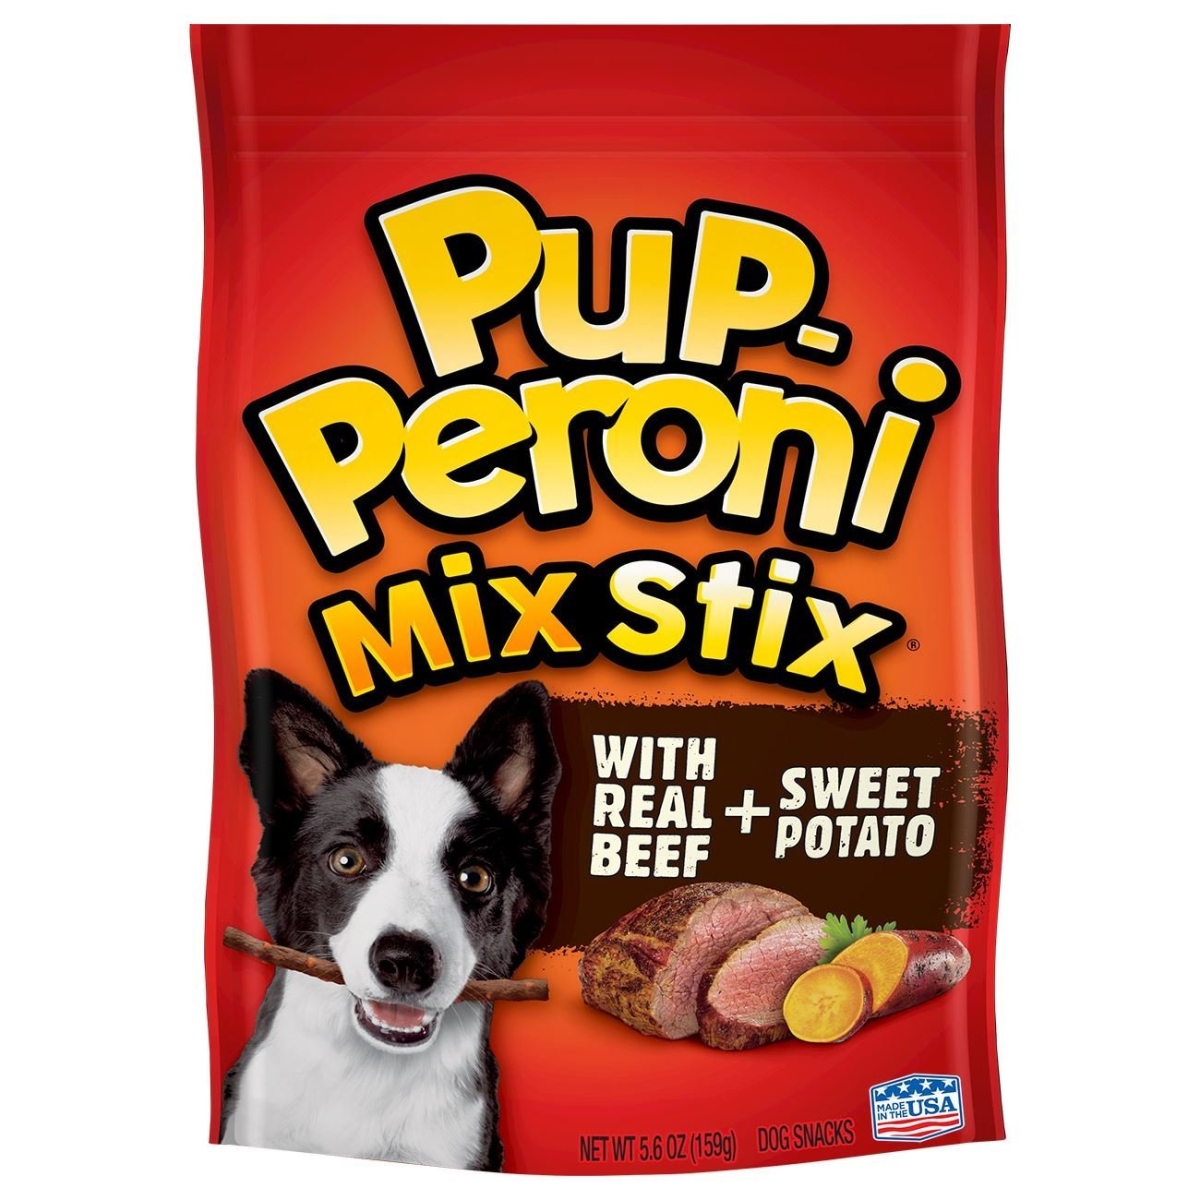 Pup-peroni 799915 5.6 Oz Pup-peroni Mix Stix Braised Beef With Sweet Potato